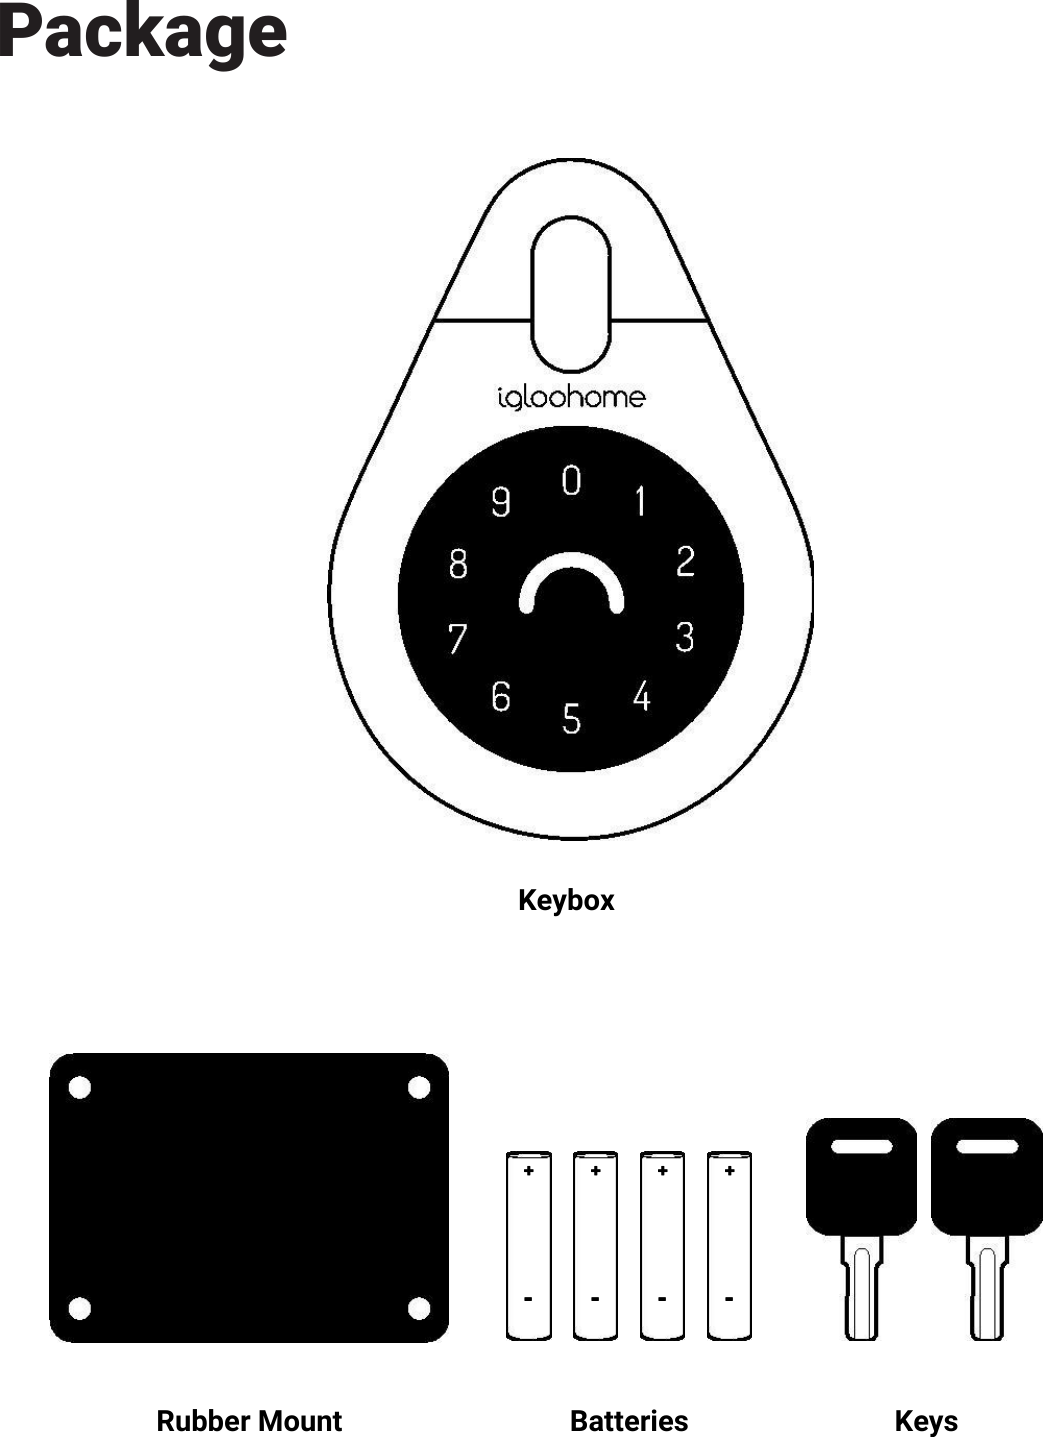   Package Keybox + - + - + - + - Rubber Mount Batteries Keys 